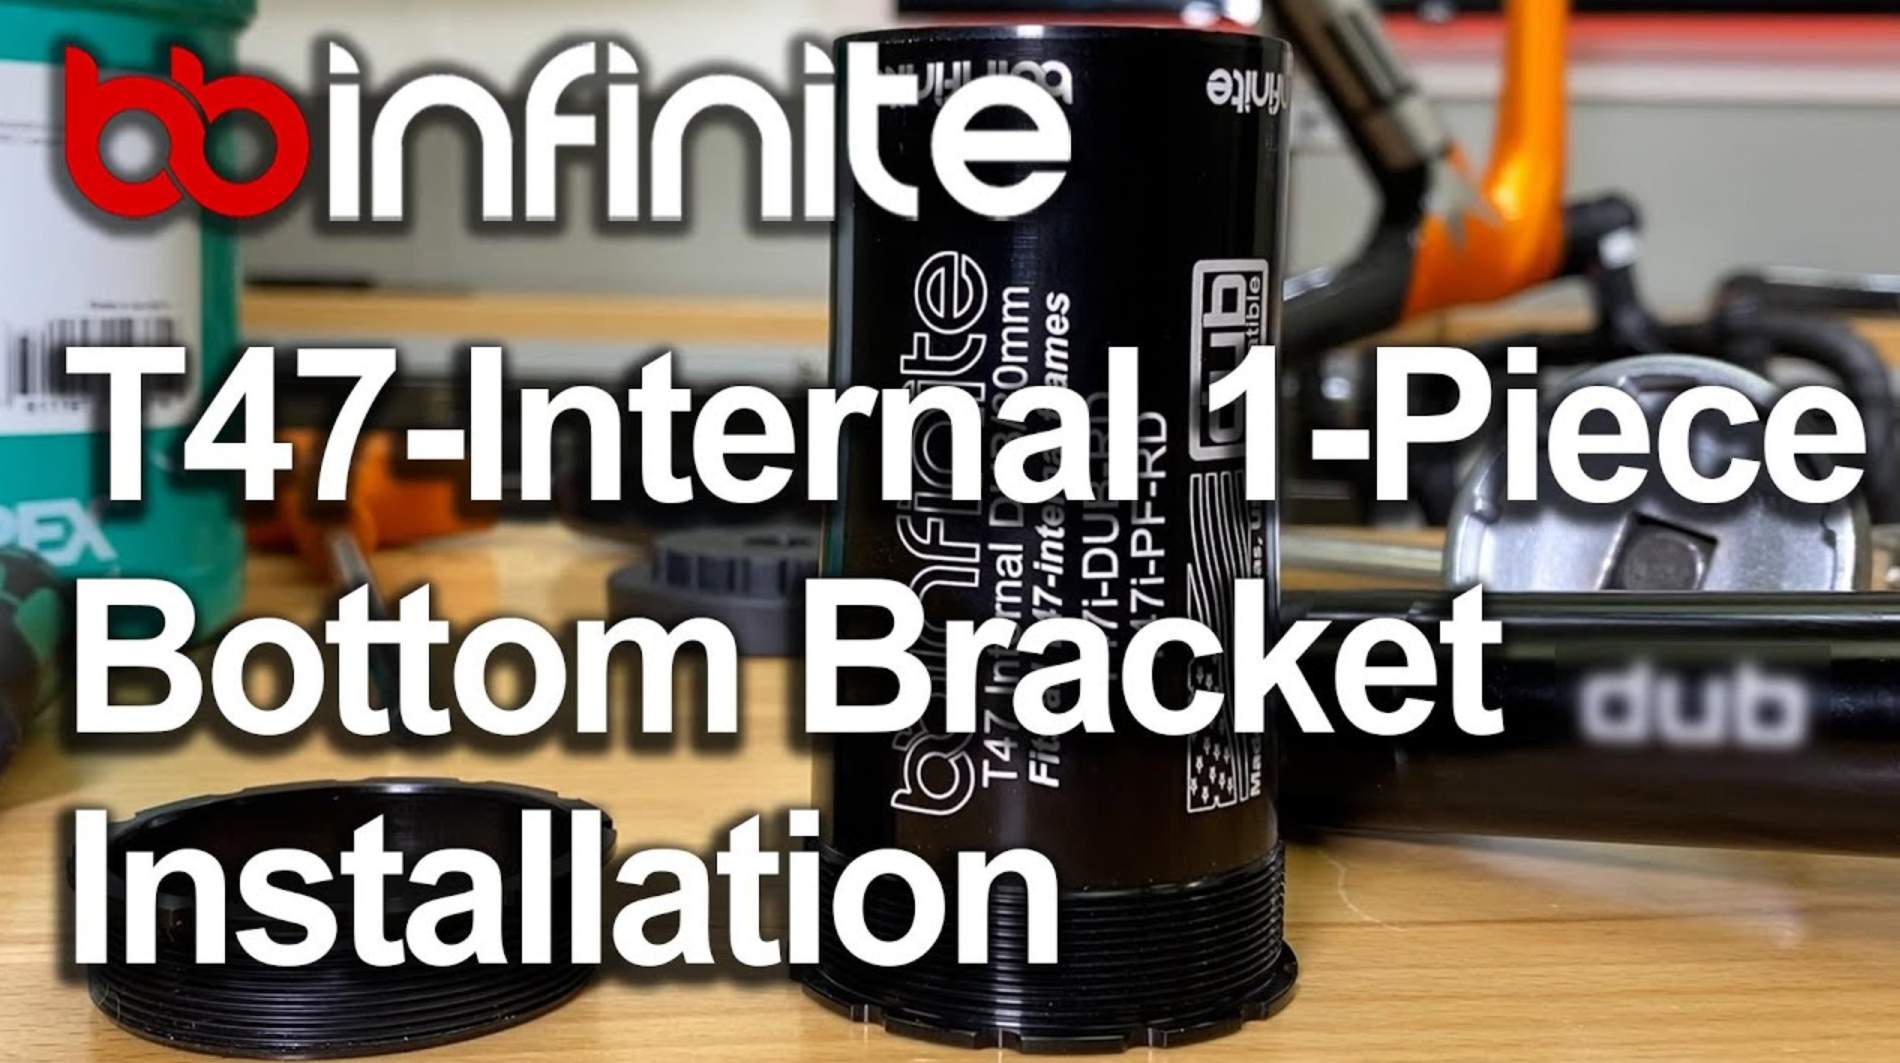 BBInfinite T47-internal, 1-Piece, Hub-style Bottom Bracket Module Install